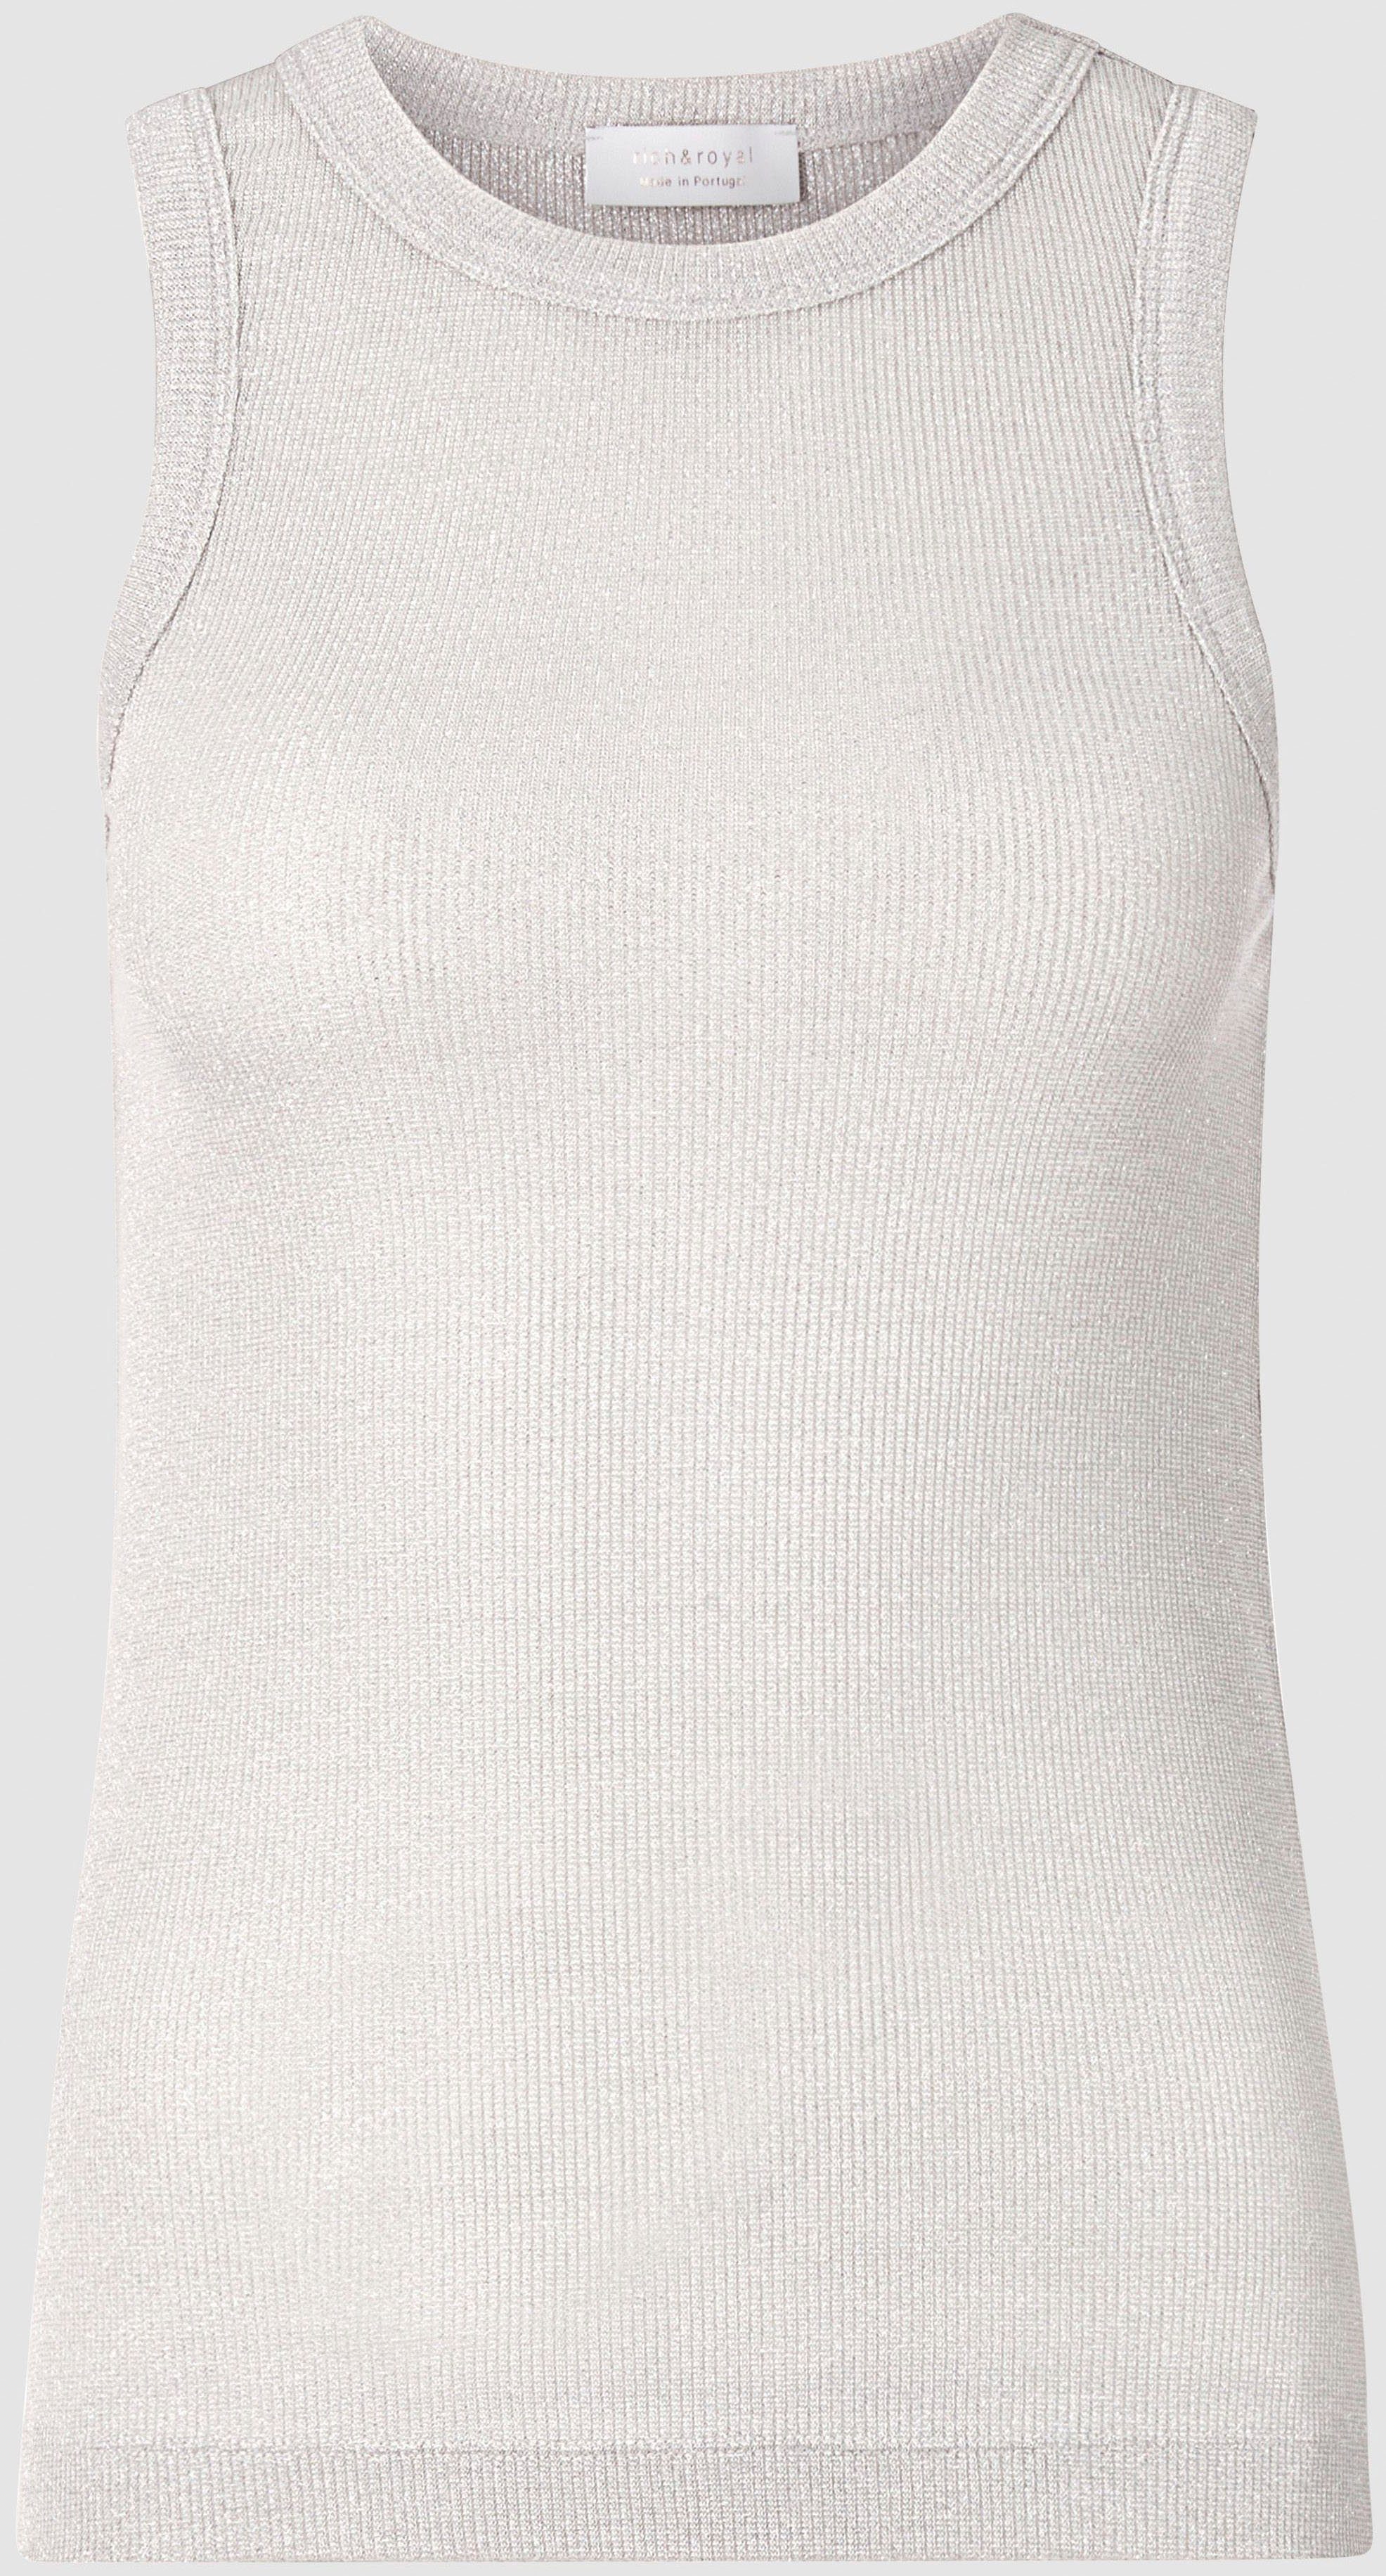 schimmerndem white & Rich Material pearl Shirttop Royal aus